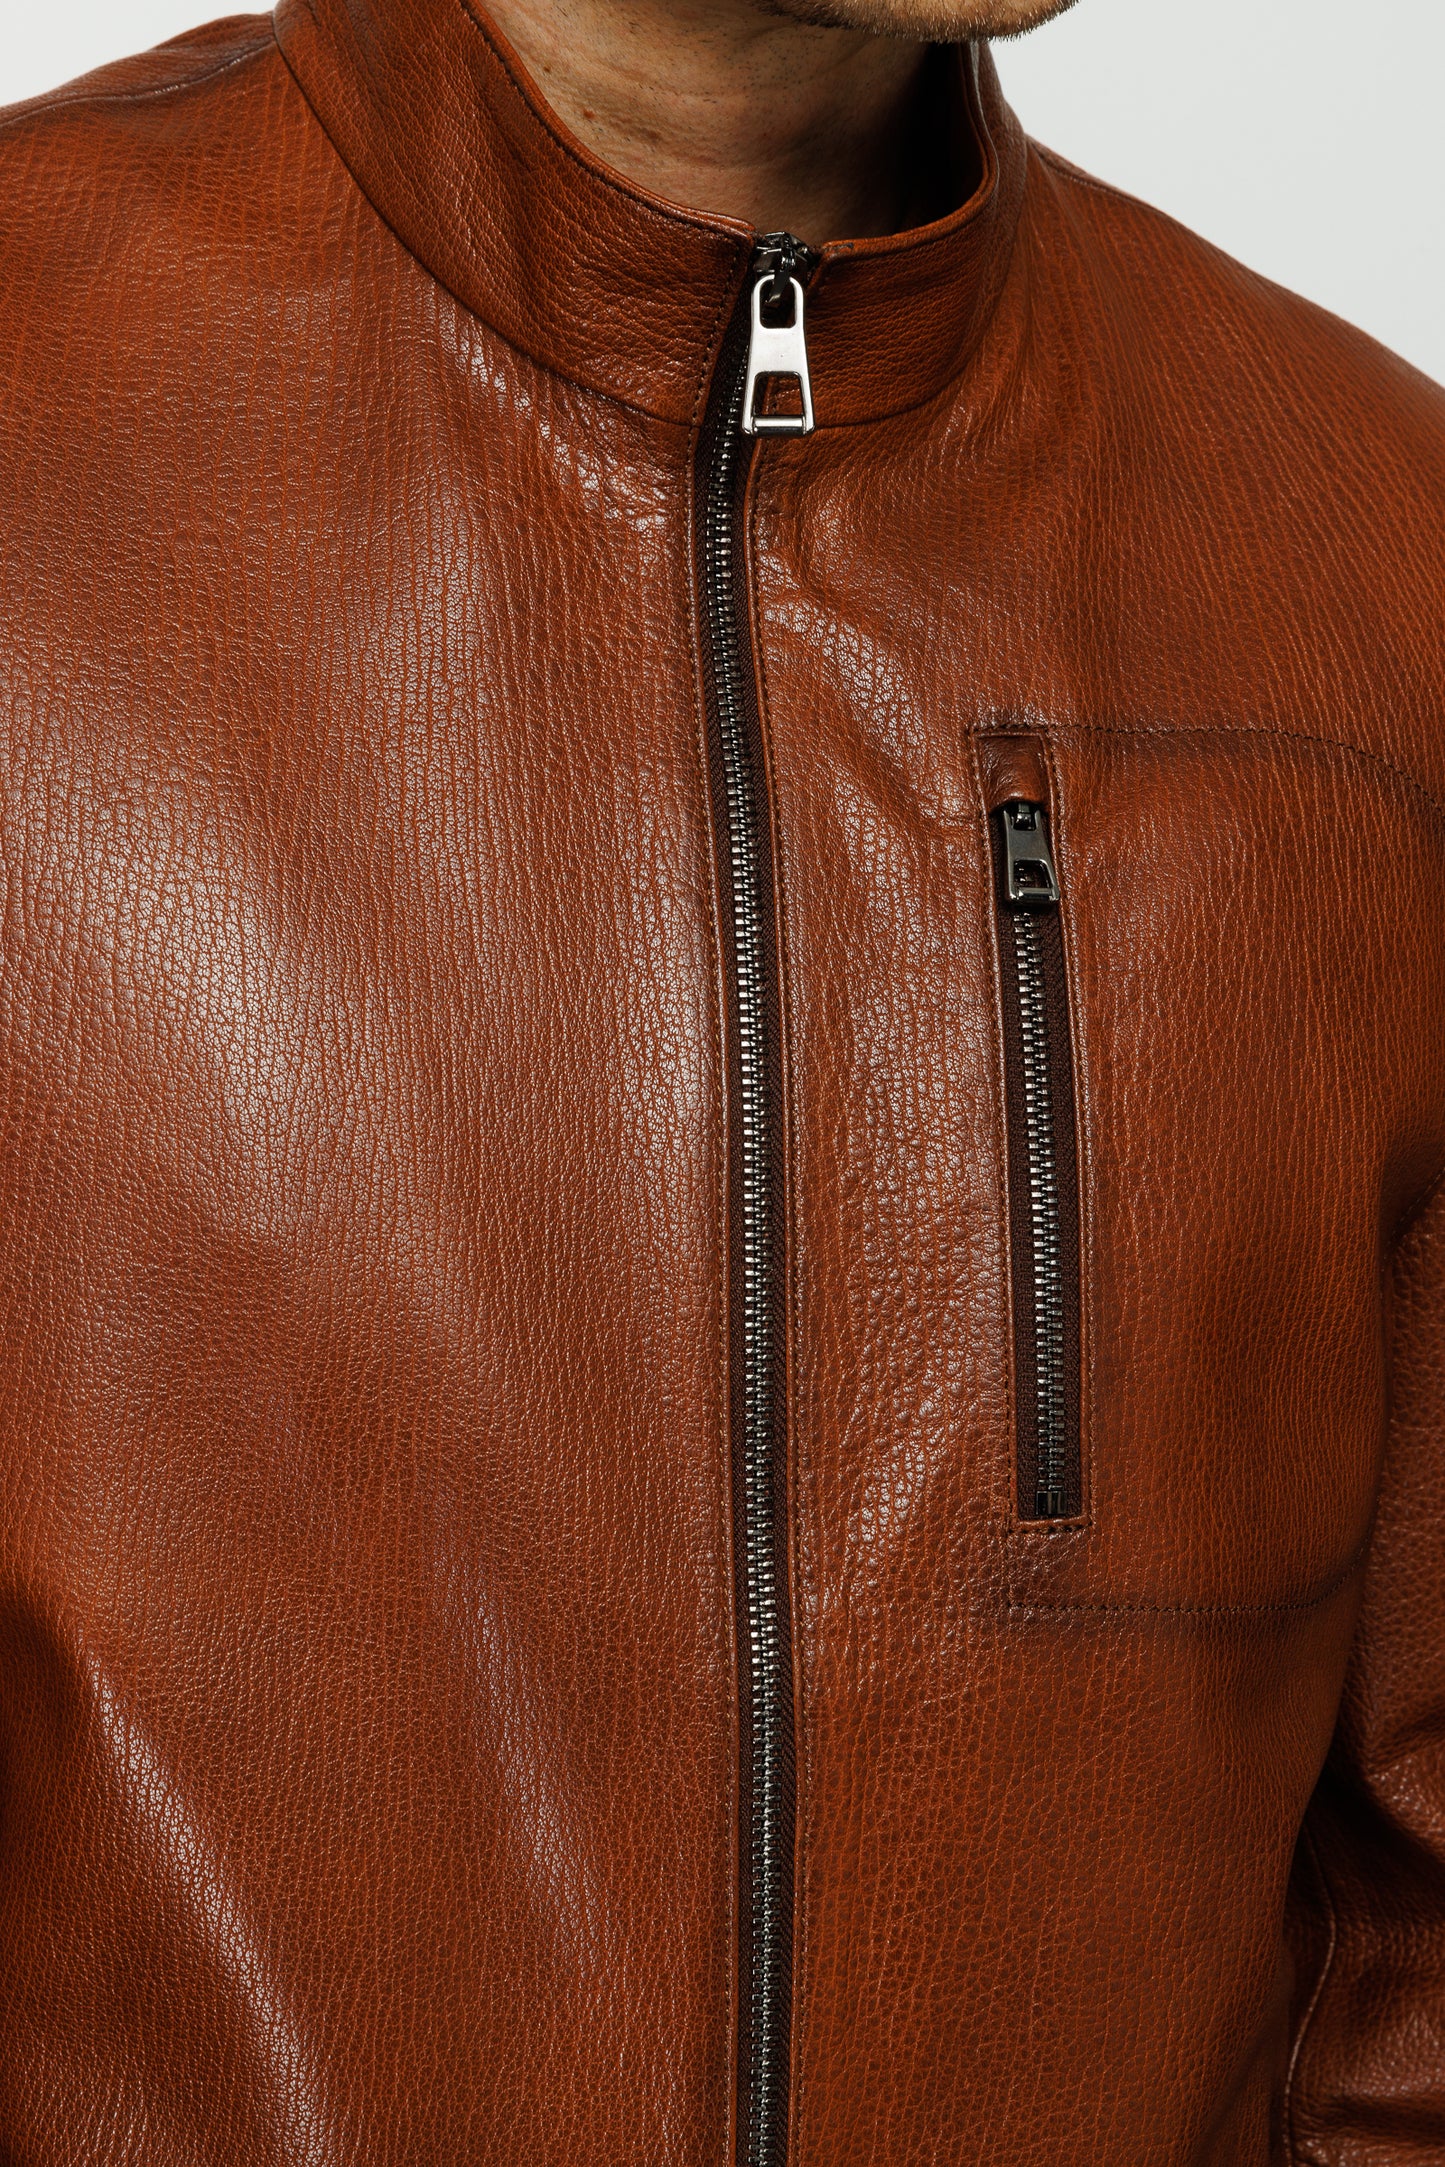 The Elgin Brown Leather Men Jacket